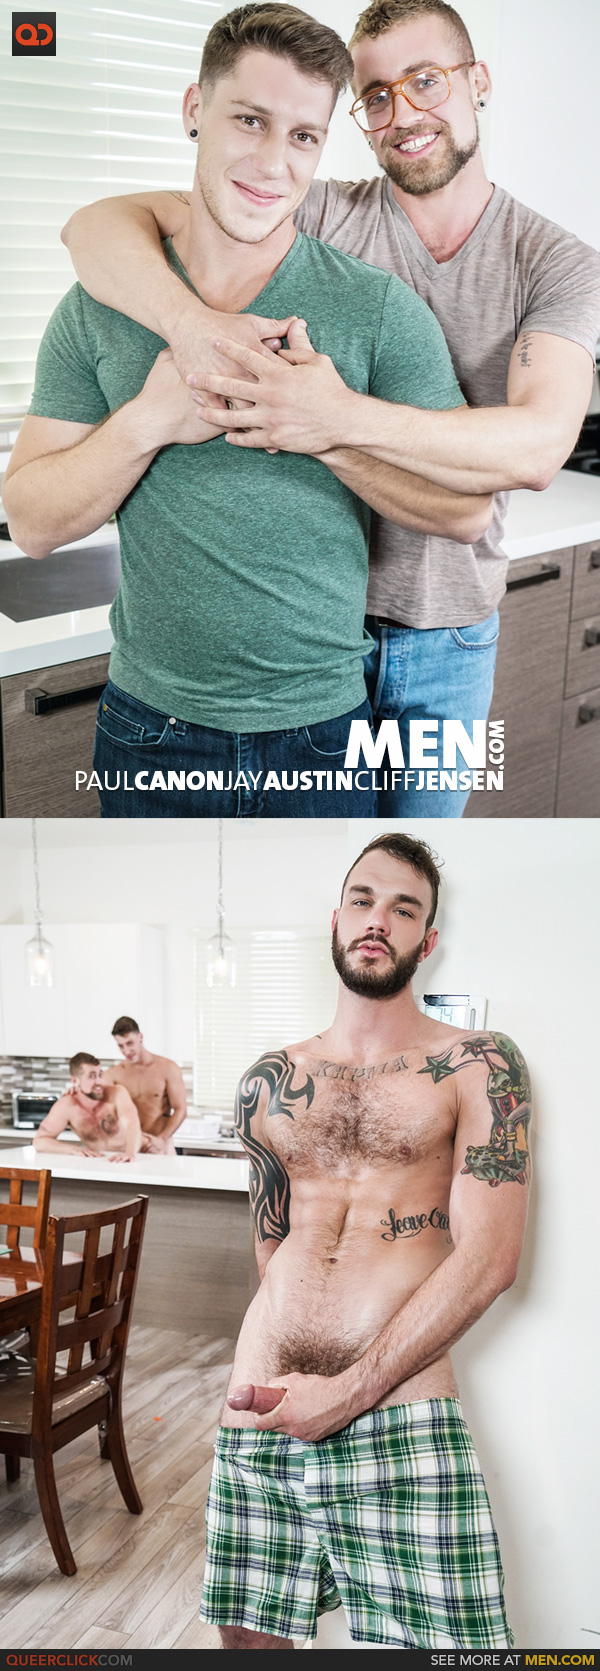 Men.com: Paul Canon, Jay Austin and Cliff Jensen